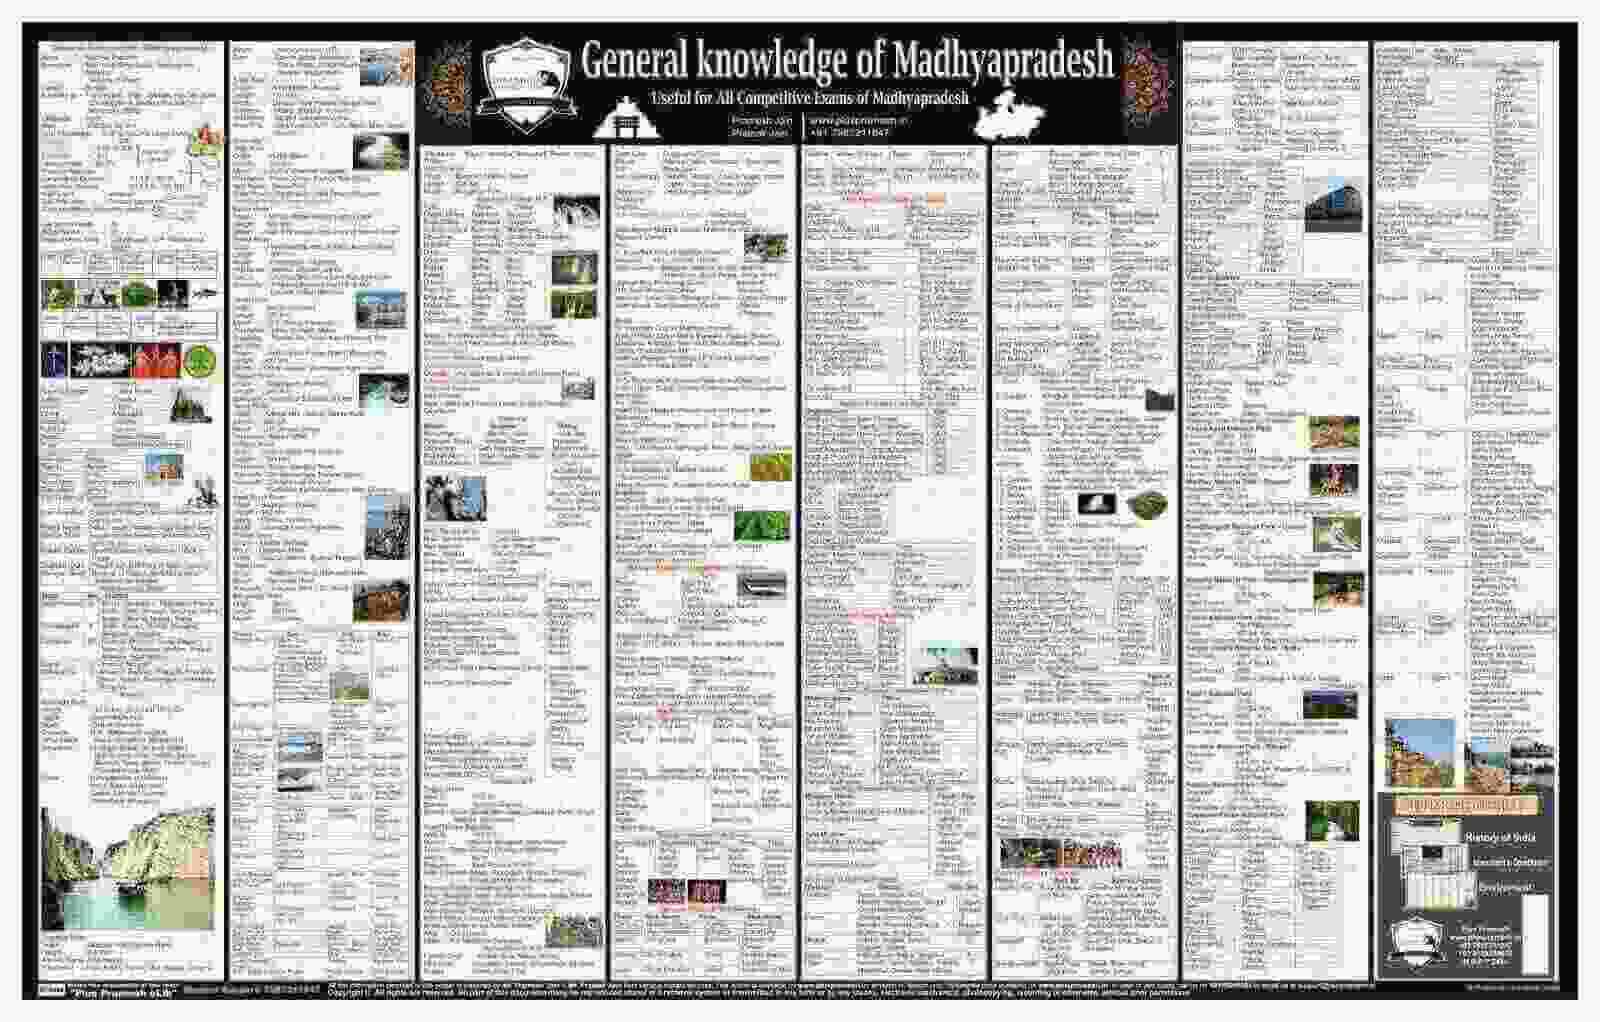 [MP GK Wall Chart] Madhya Pradesh General Knowledge Wall Chart in english | MPPSC study material